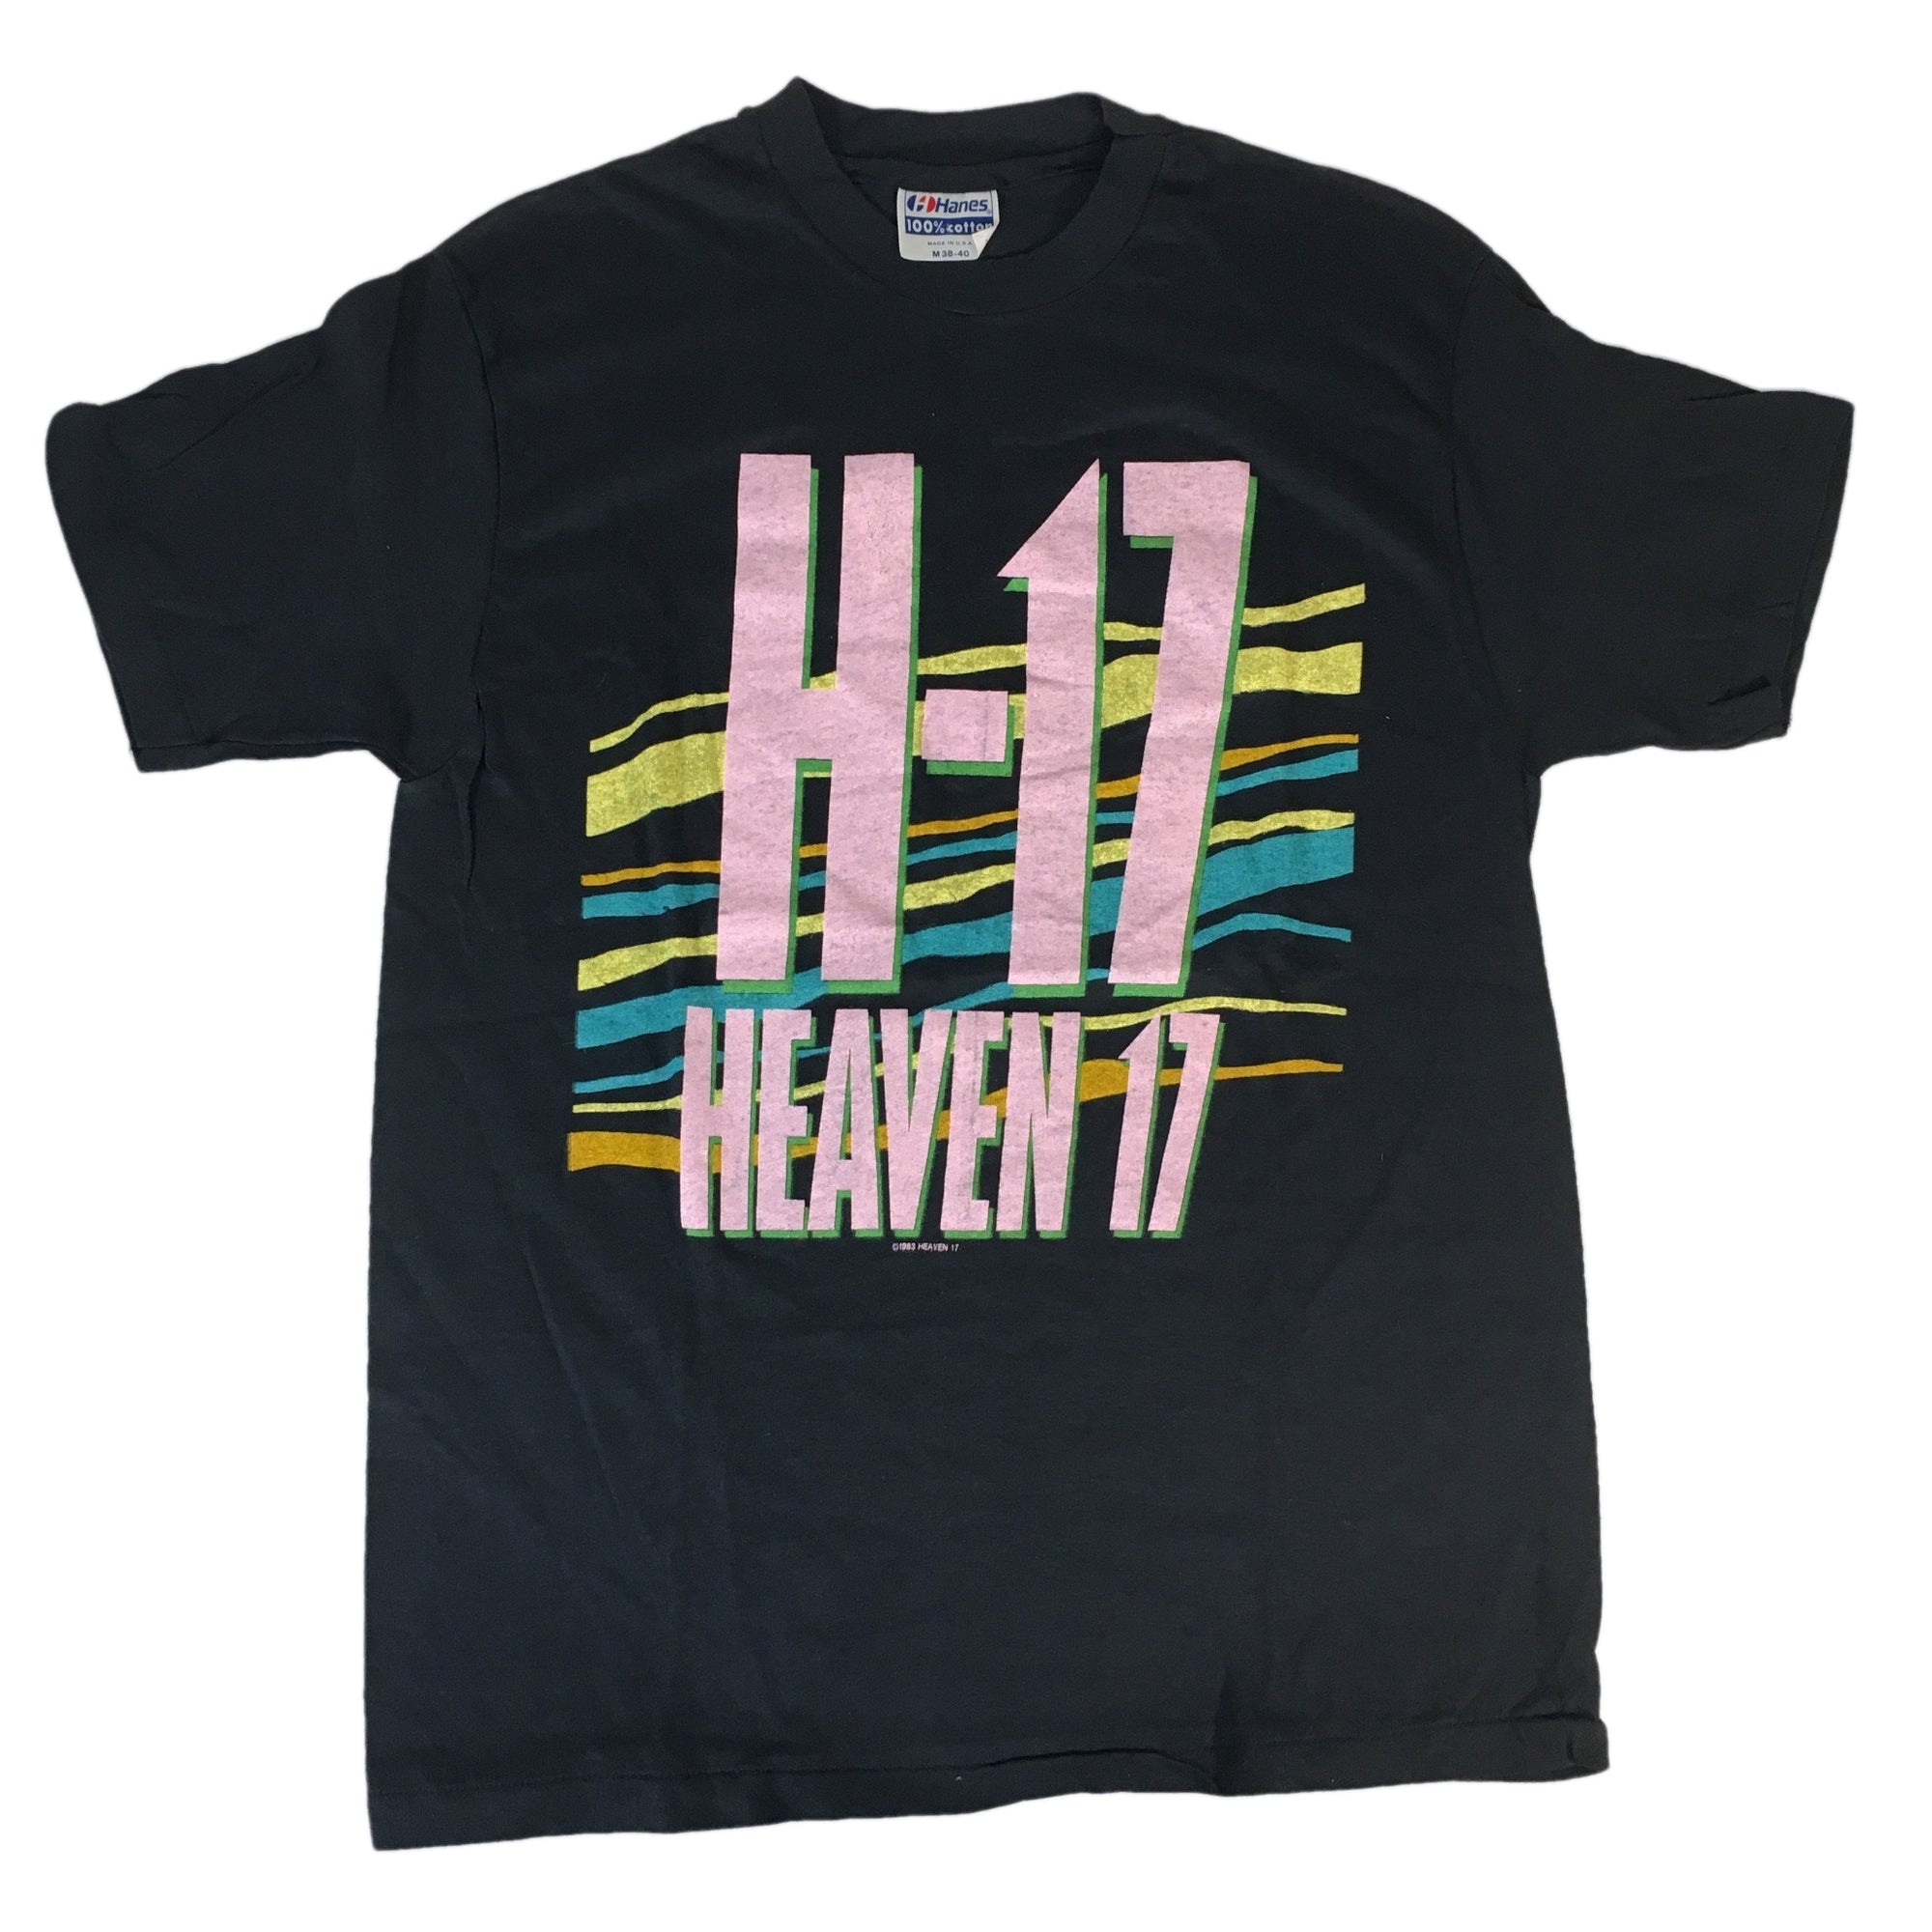 Vintage Heaven 17 "H-17" T-Shirt - jointcustodydc